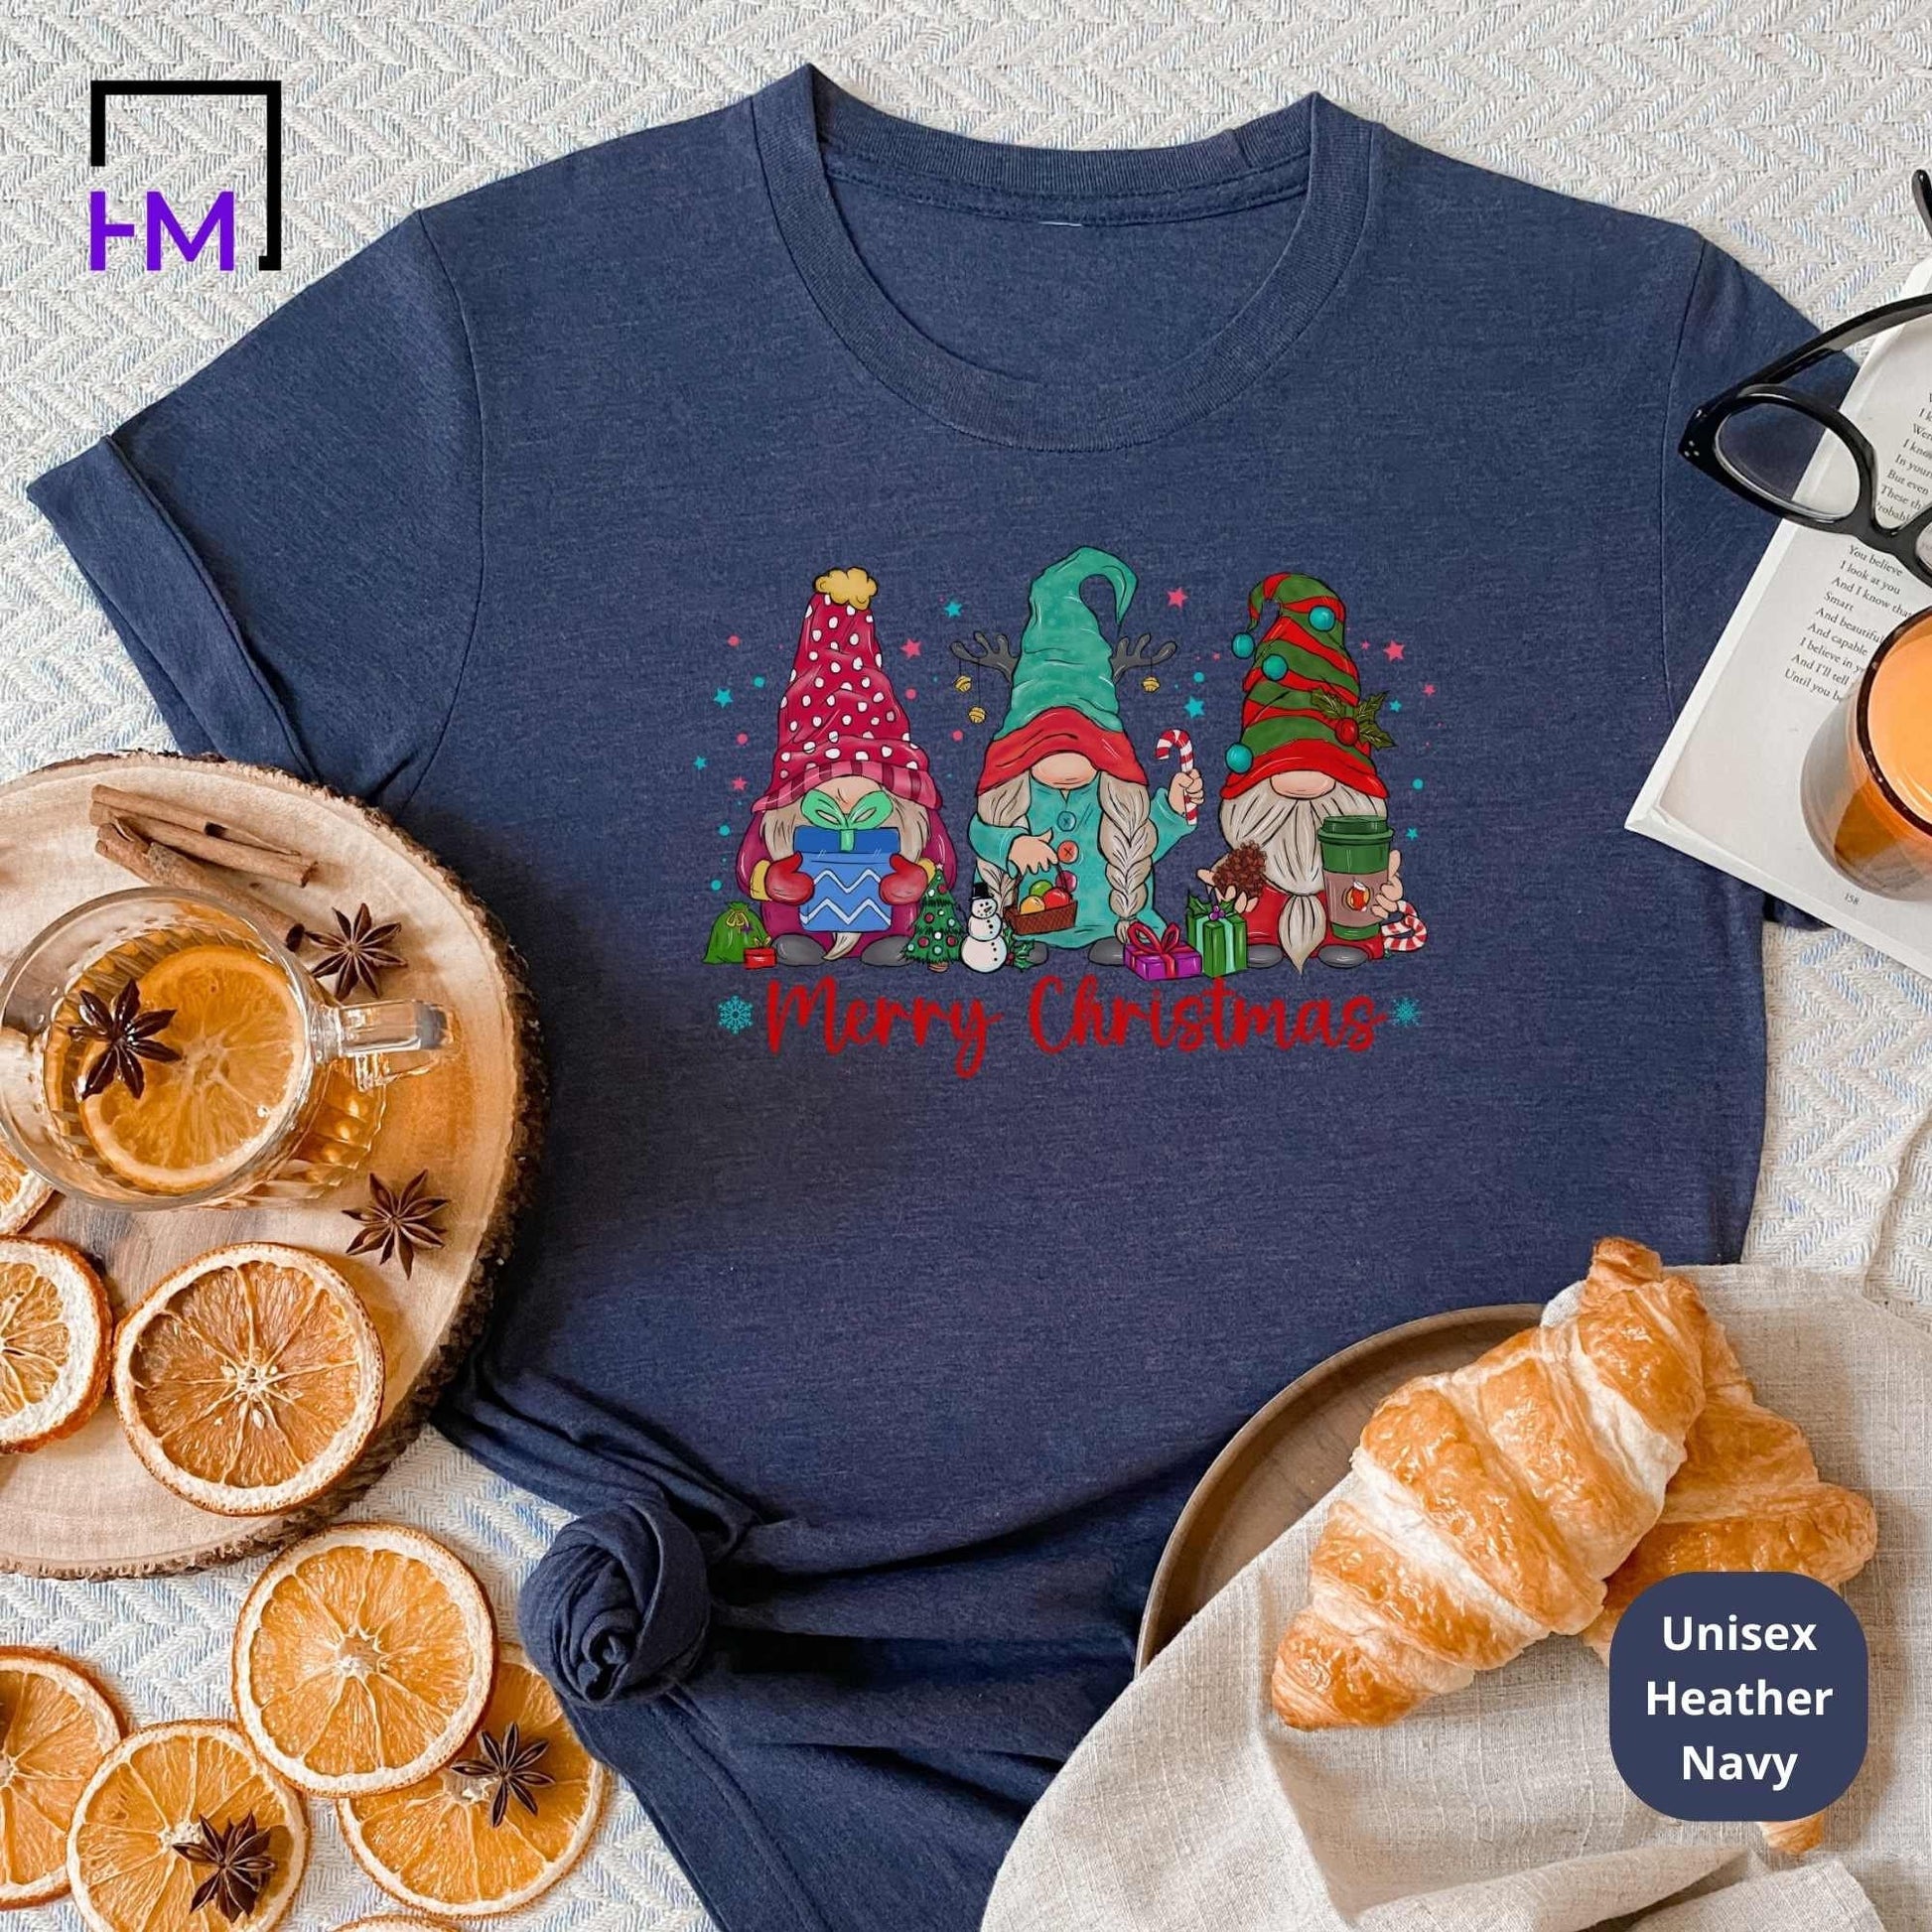 Christmas Gnome Sweatshirt | Warm Cozy Fall Crewneck Sweater for Coffee Lovers, Bestie X-Mas Presents, Avail in TShirt, Hoodie, Plus Size HMDesignStudioUS